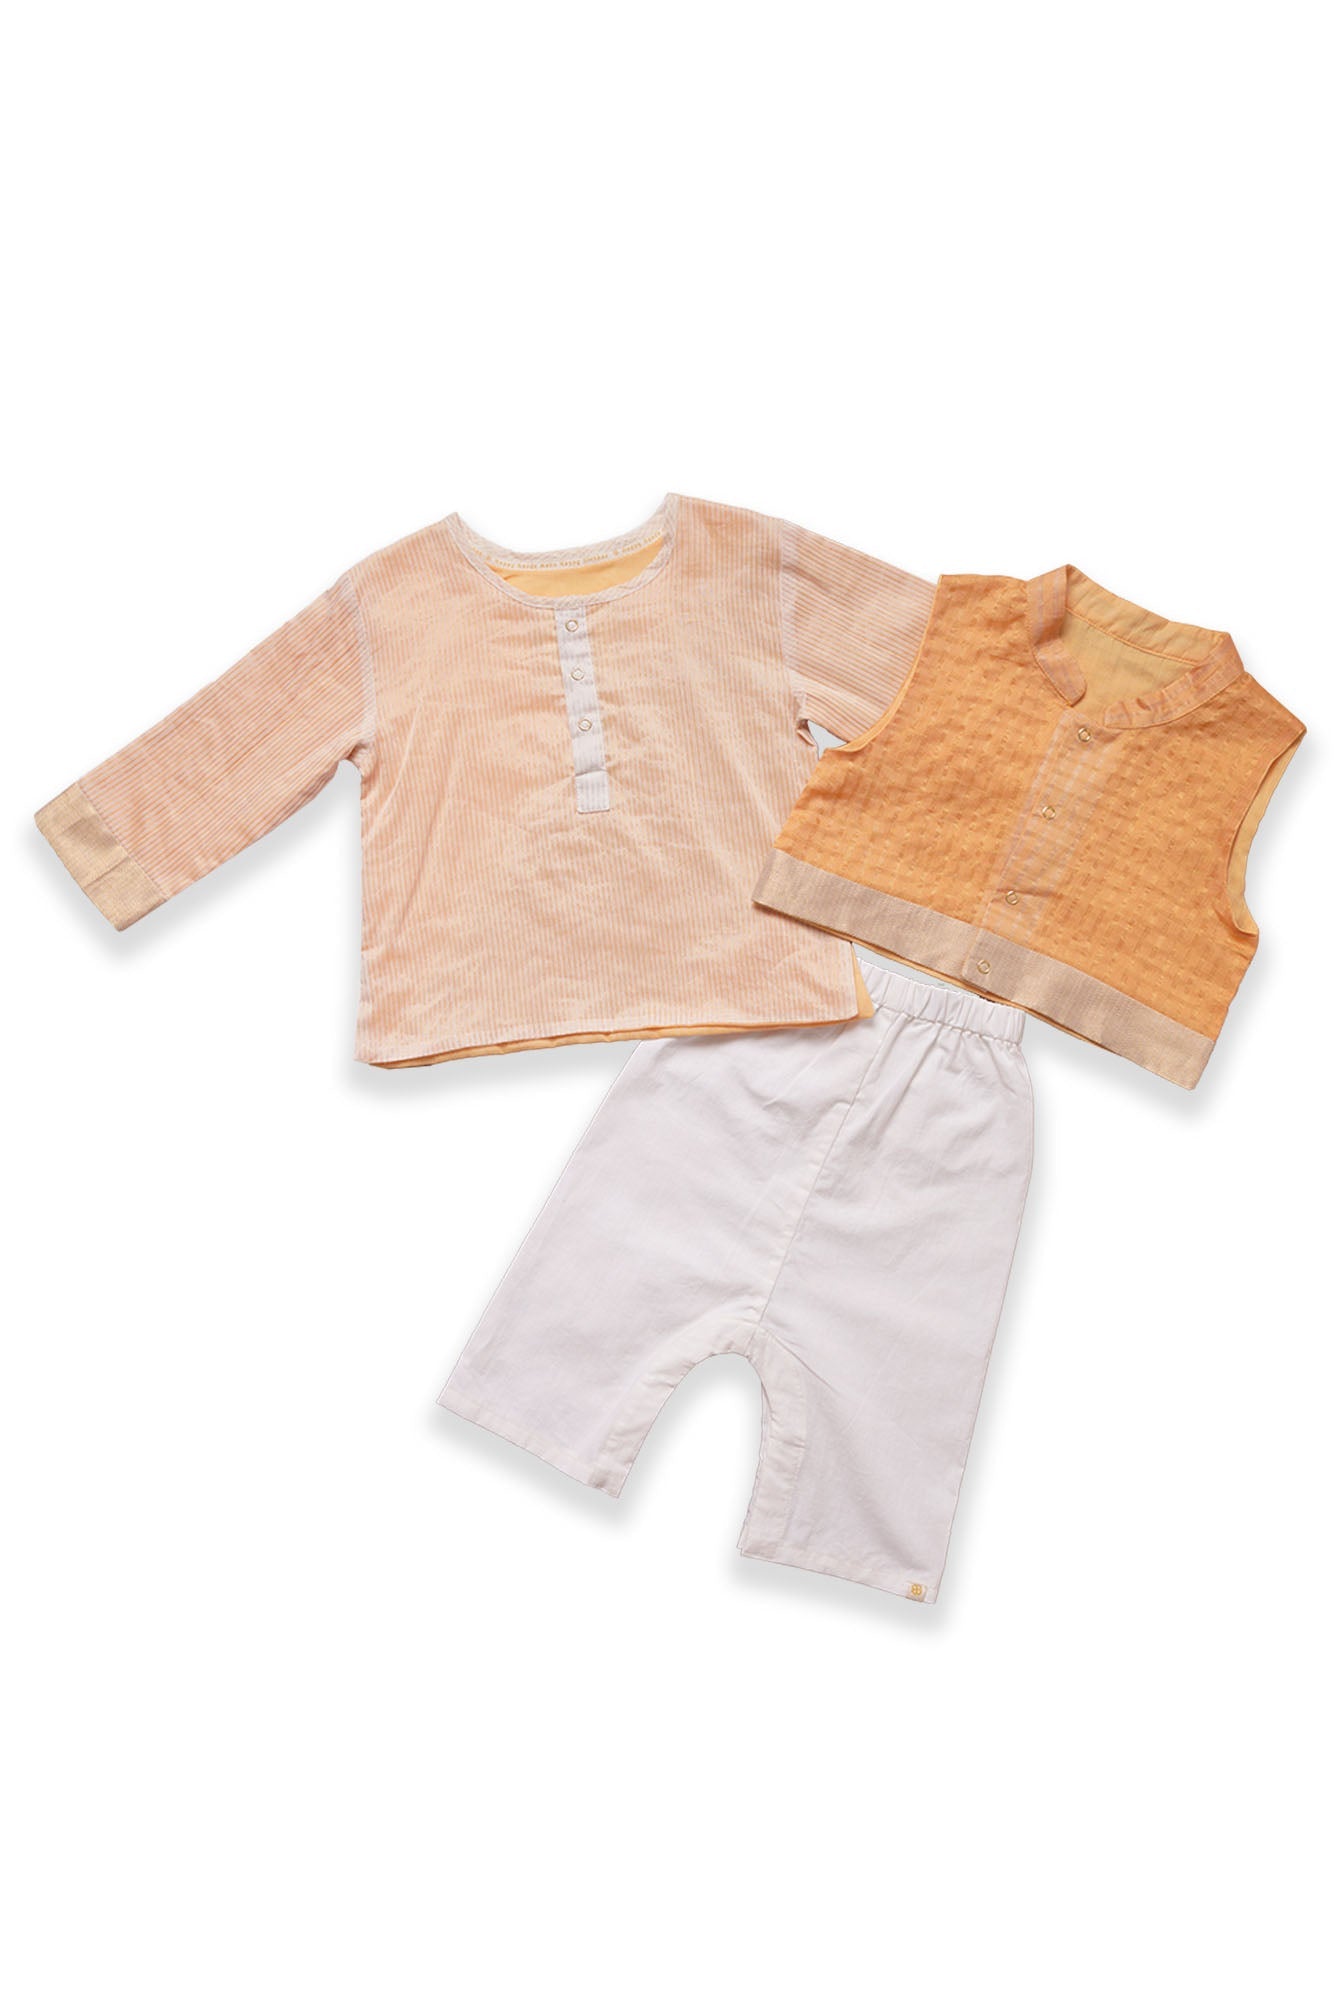 Maheshwari Handwoven Cotton Silk Kurta, Bundi & Pant Set - Marigold - Pack of 3 - CiceroniKurta SetGreendigo